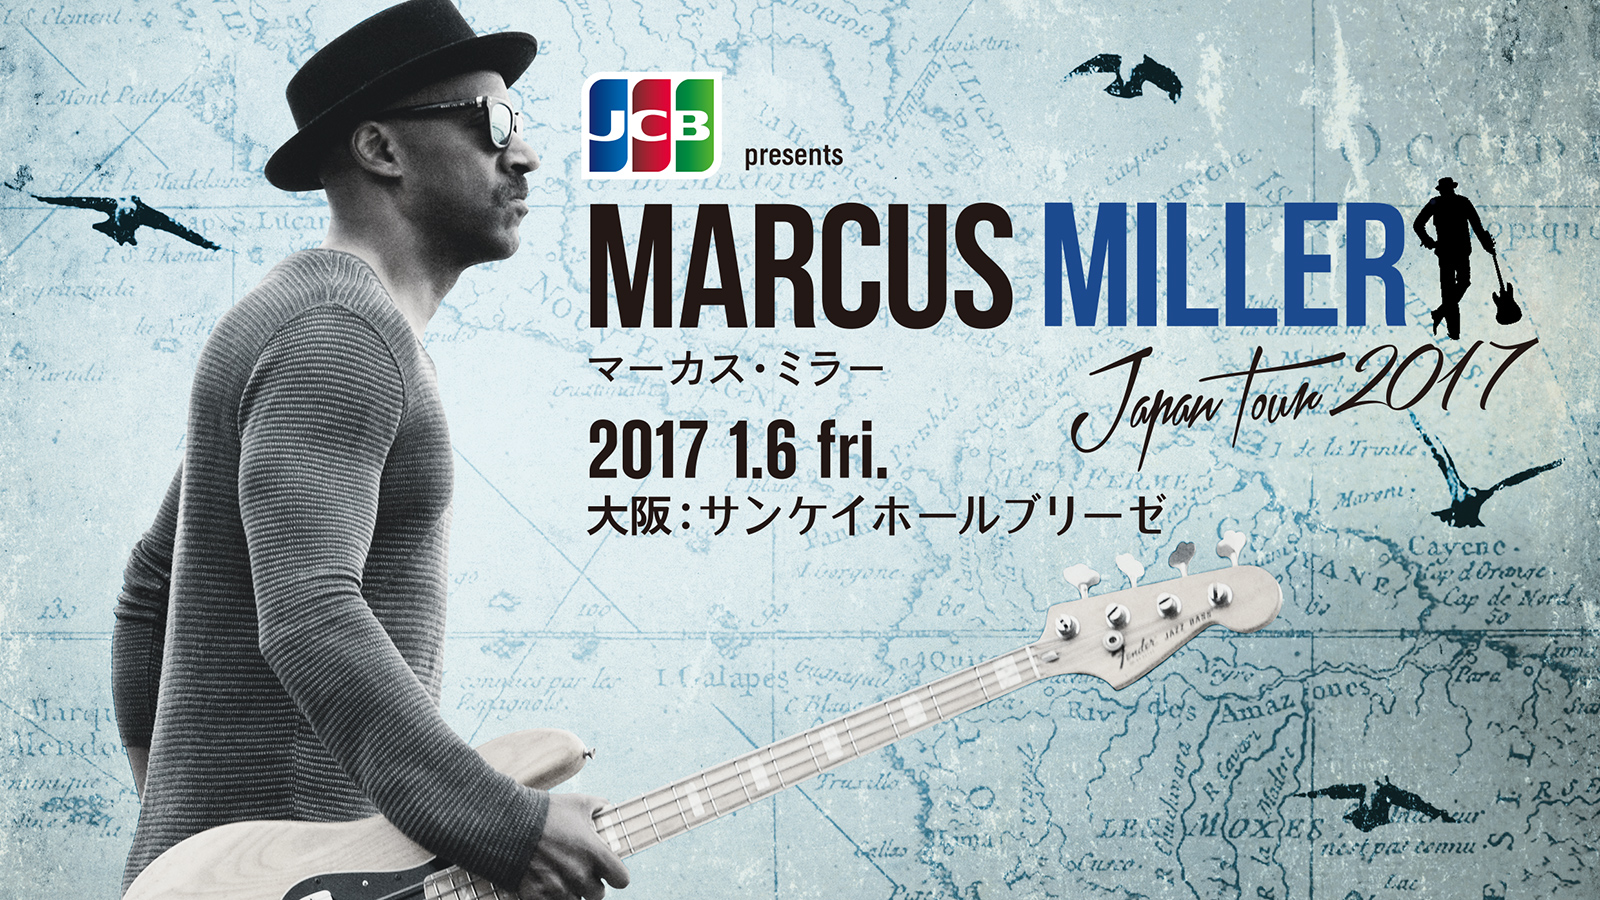 MARCUS MILLER Japan Tour 2017 - マーカス・ミラー 2017大阪公演